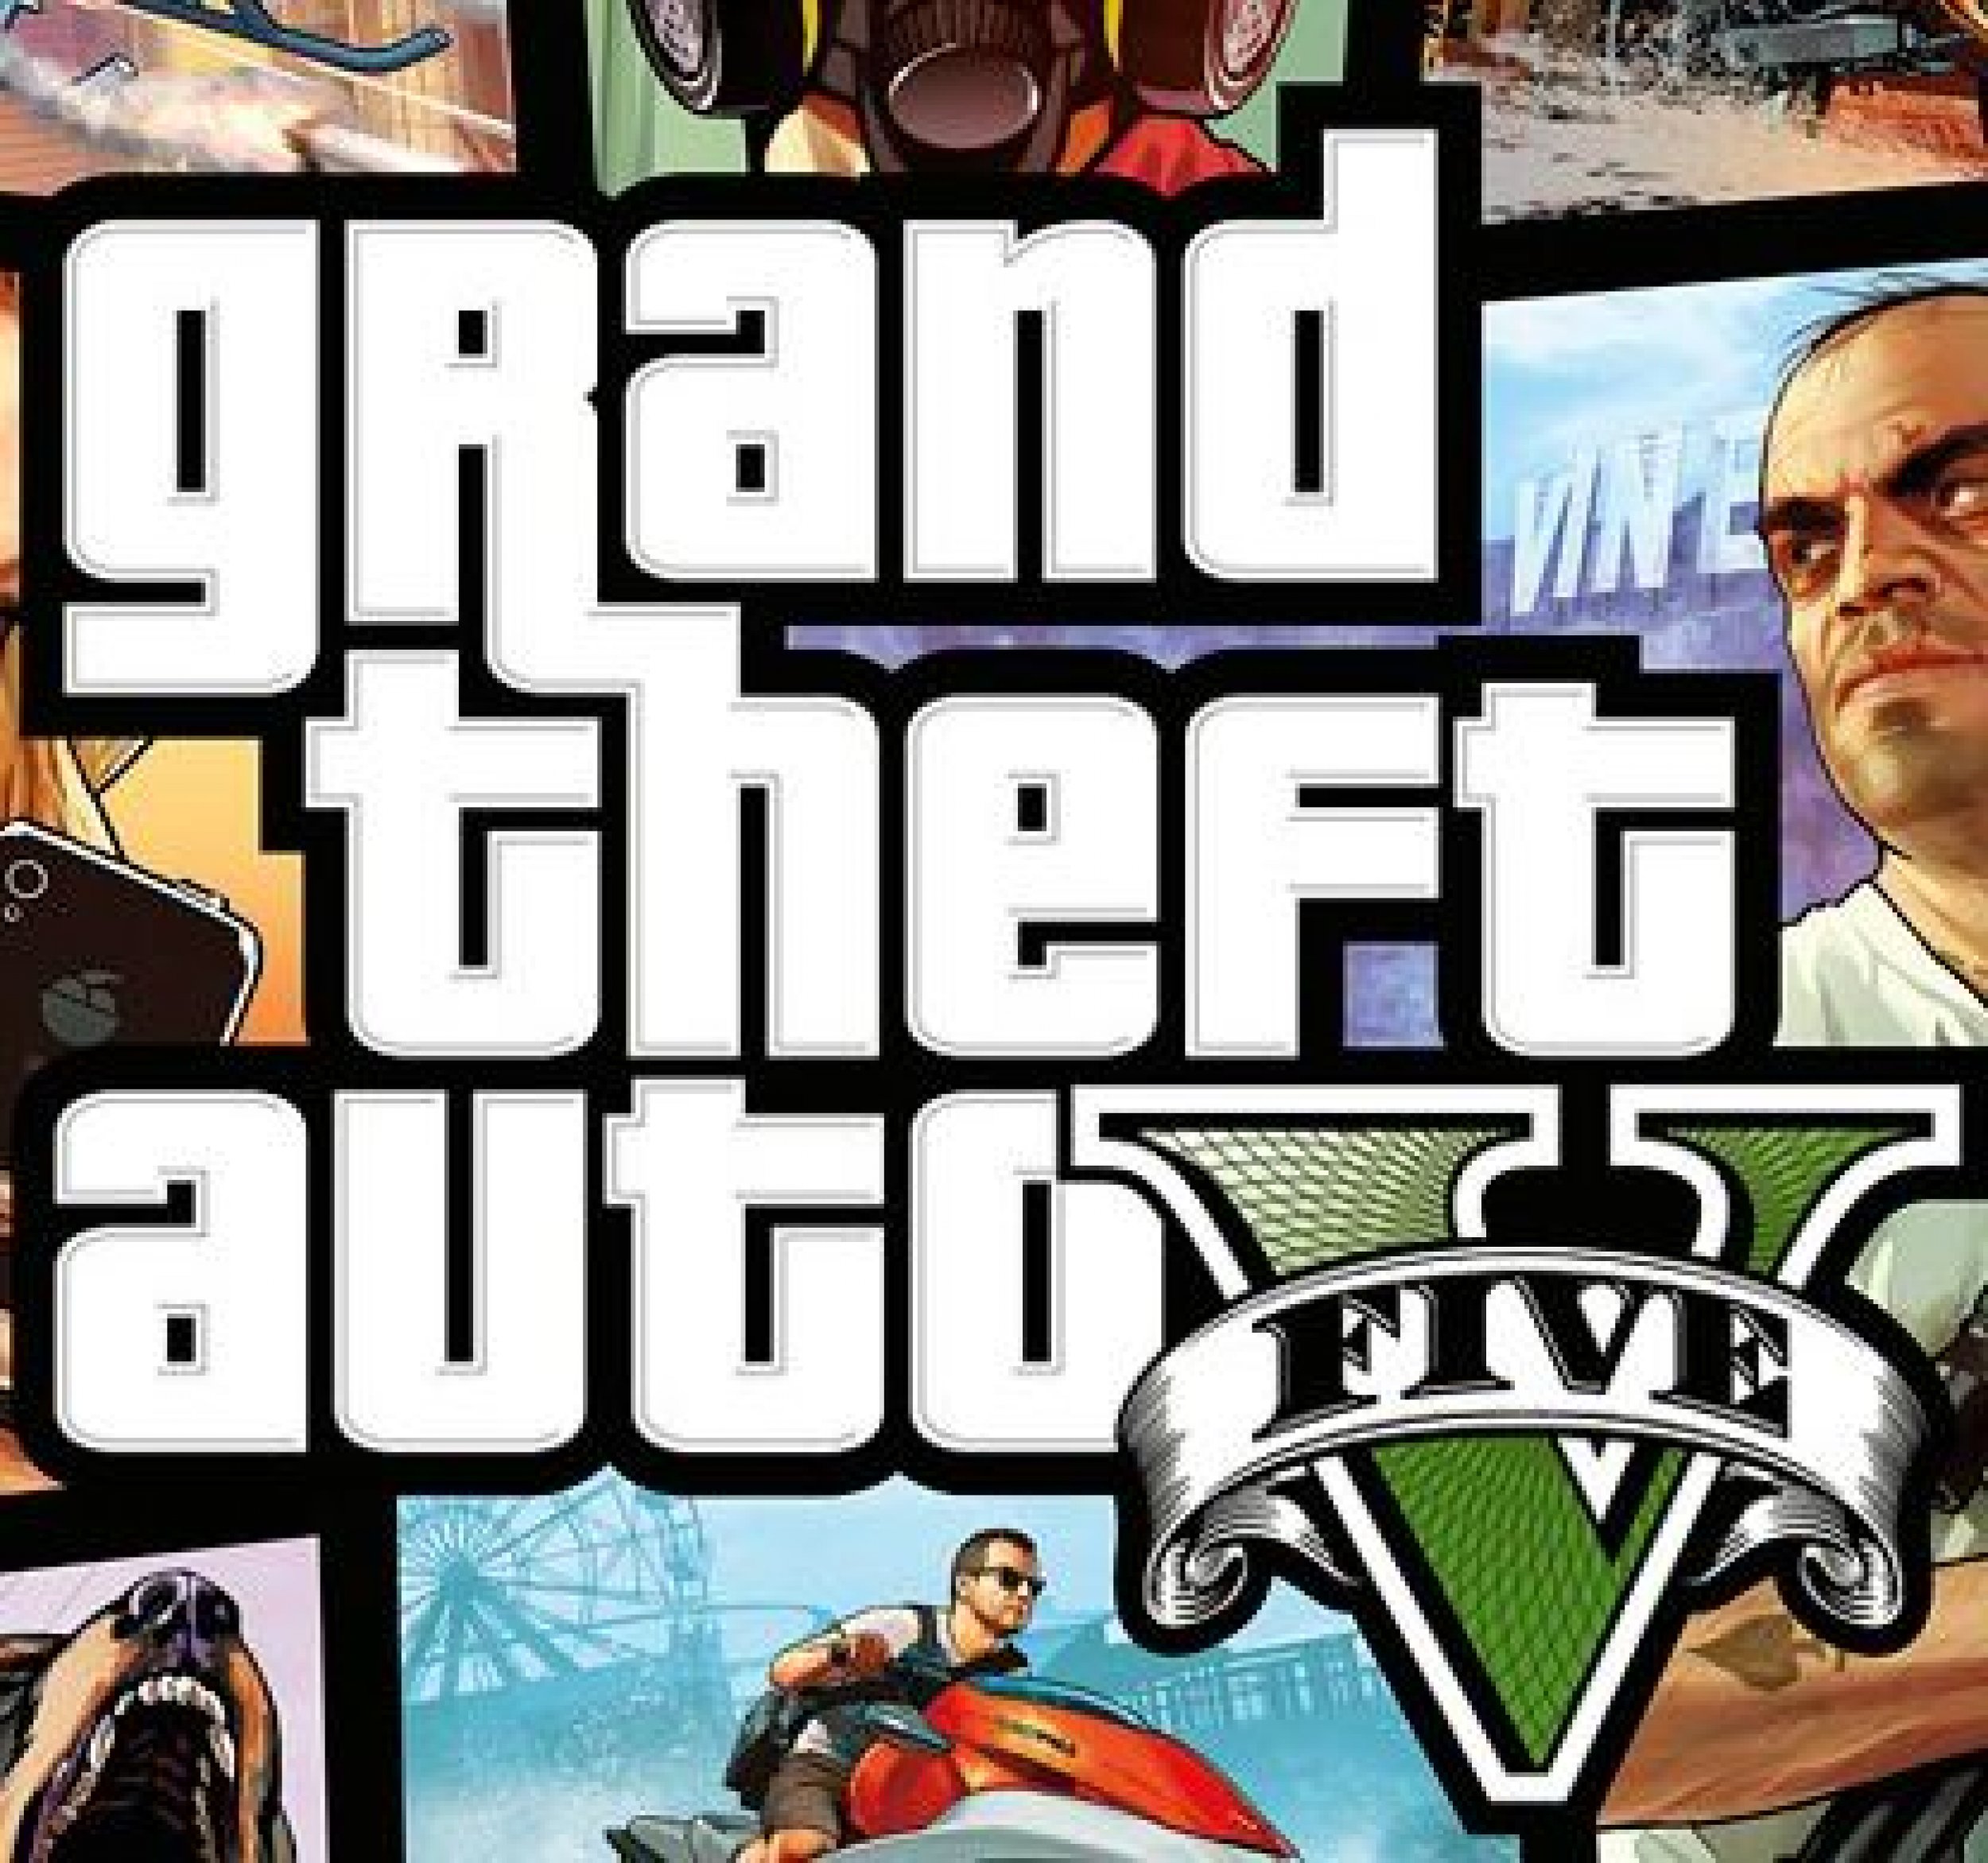 tactiek verstoring geleider Grand Theft Auto 5': 'GTA 5' For Xbox 360 Codes, Cheats, Tips, More